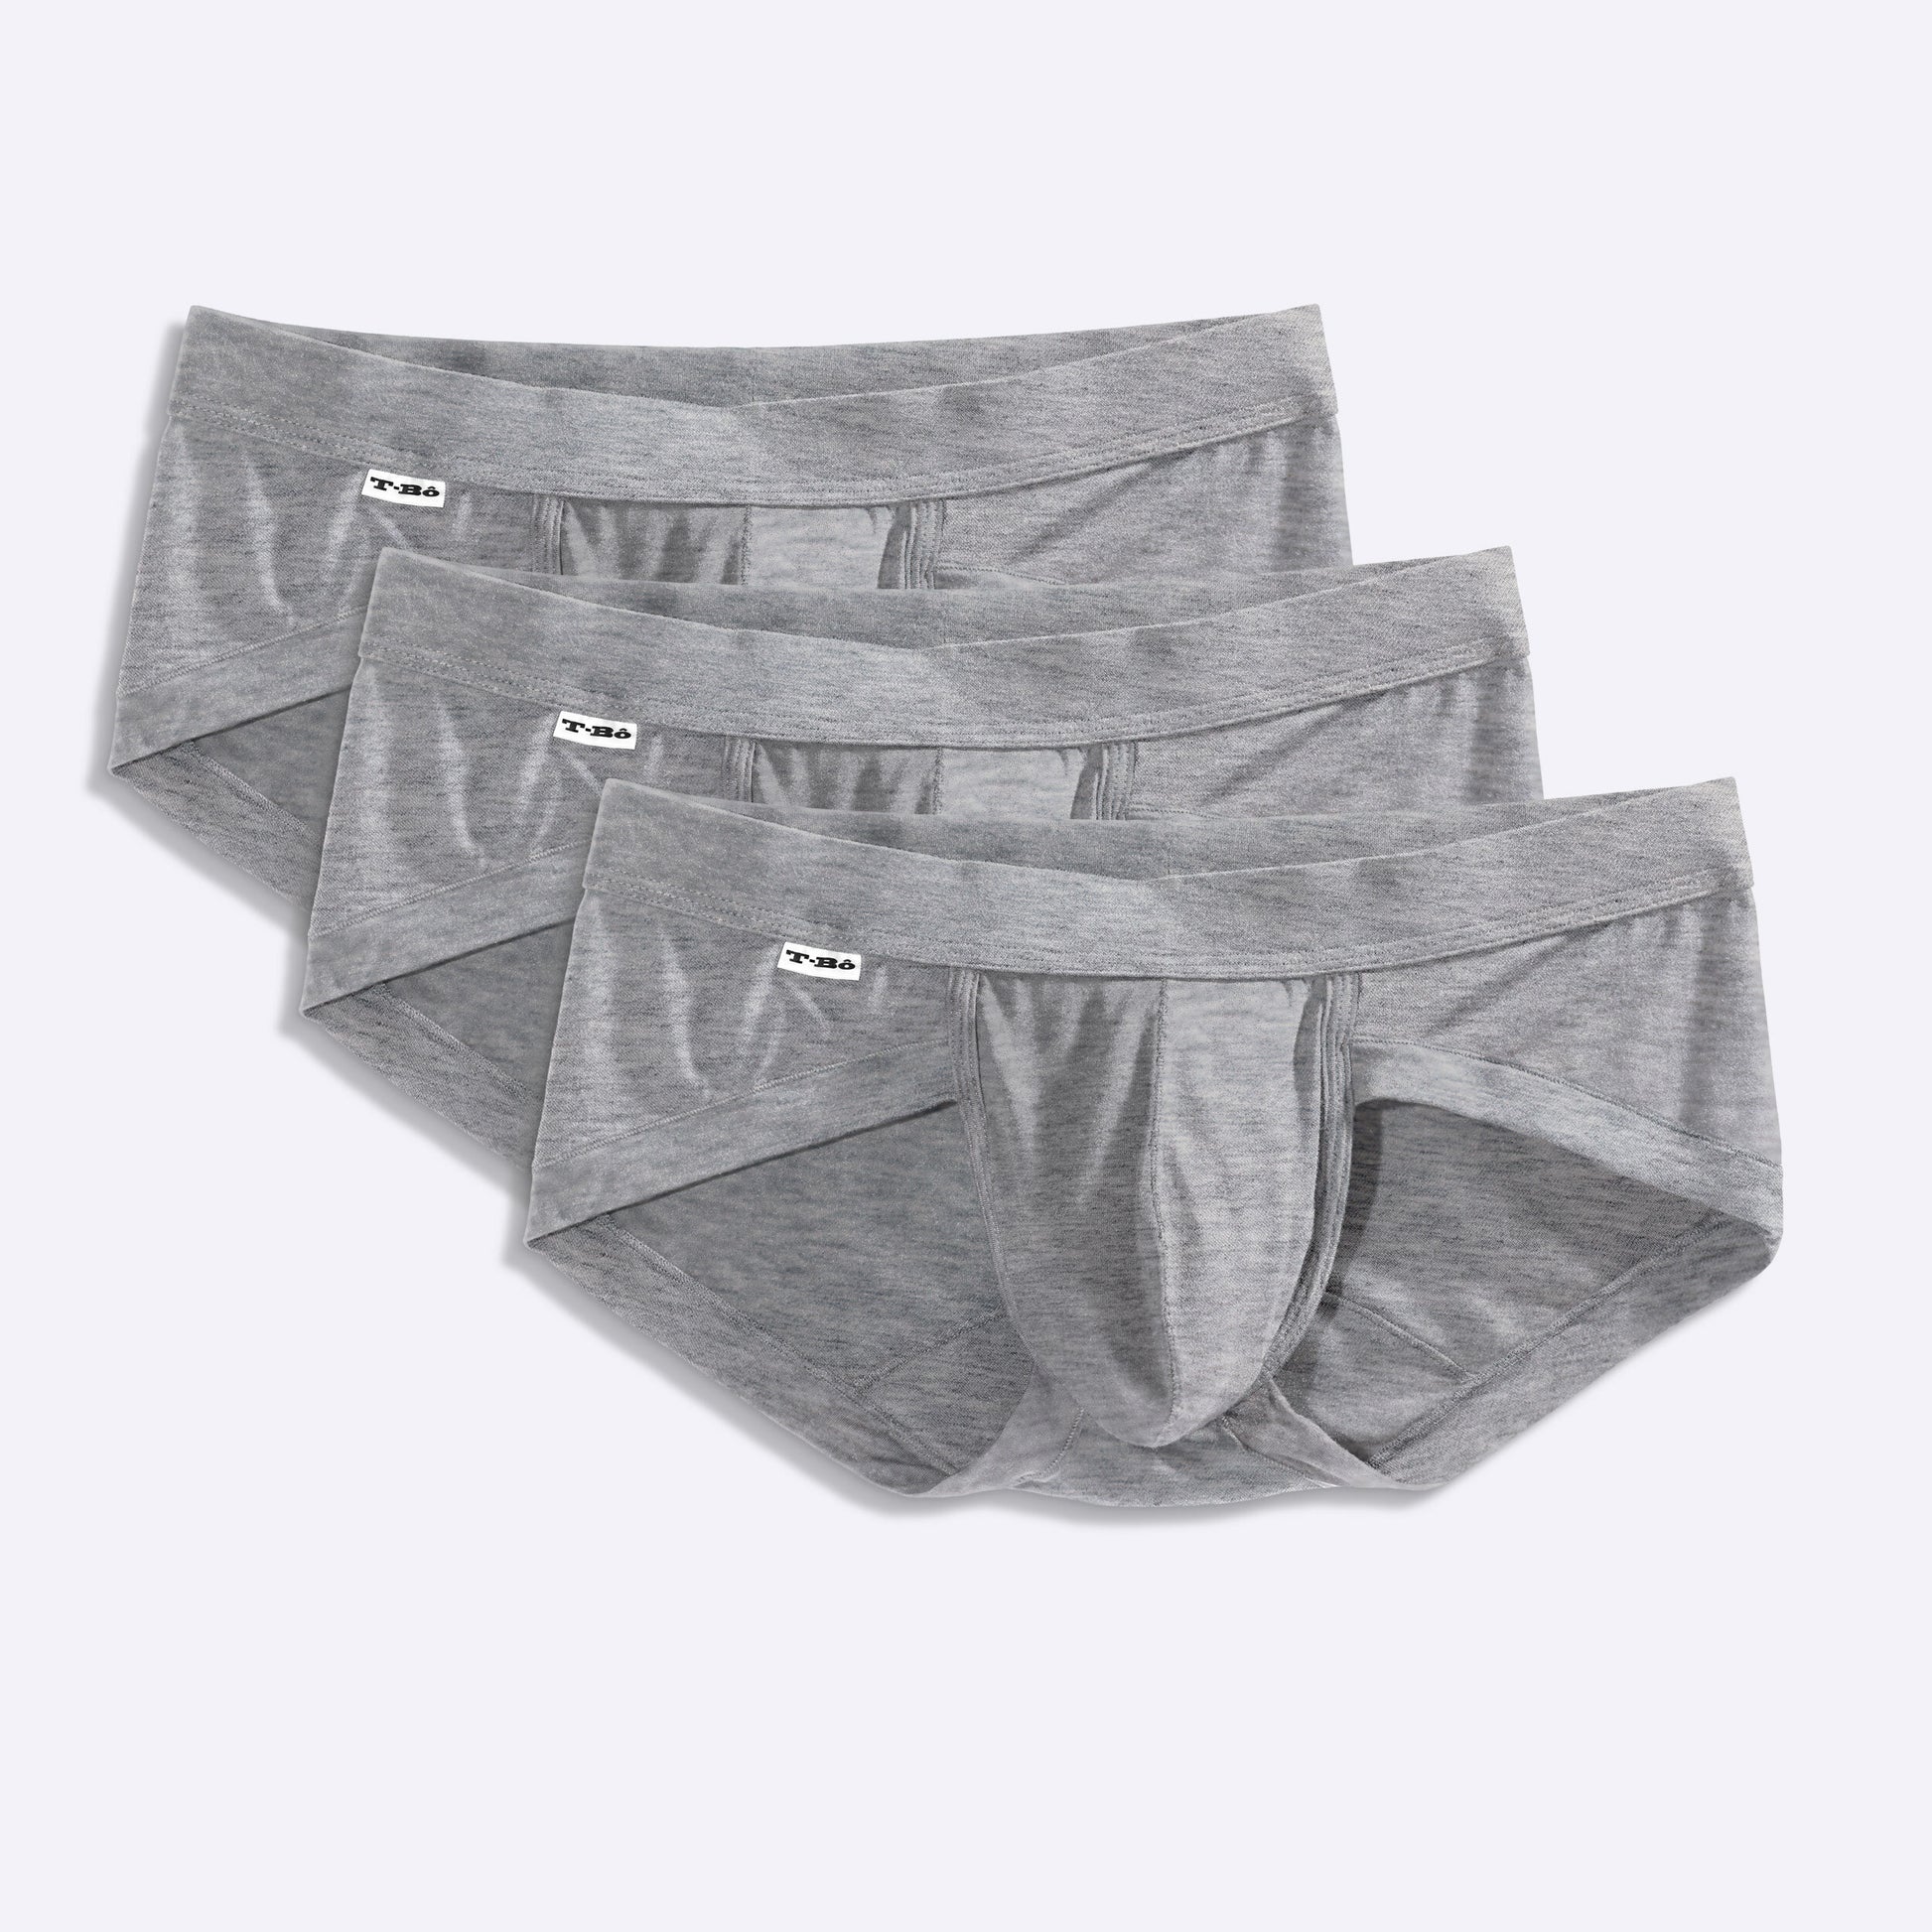 T-Bô underwear for men (tbo_underwear) - Profile